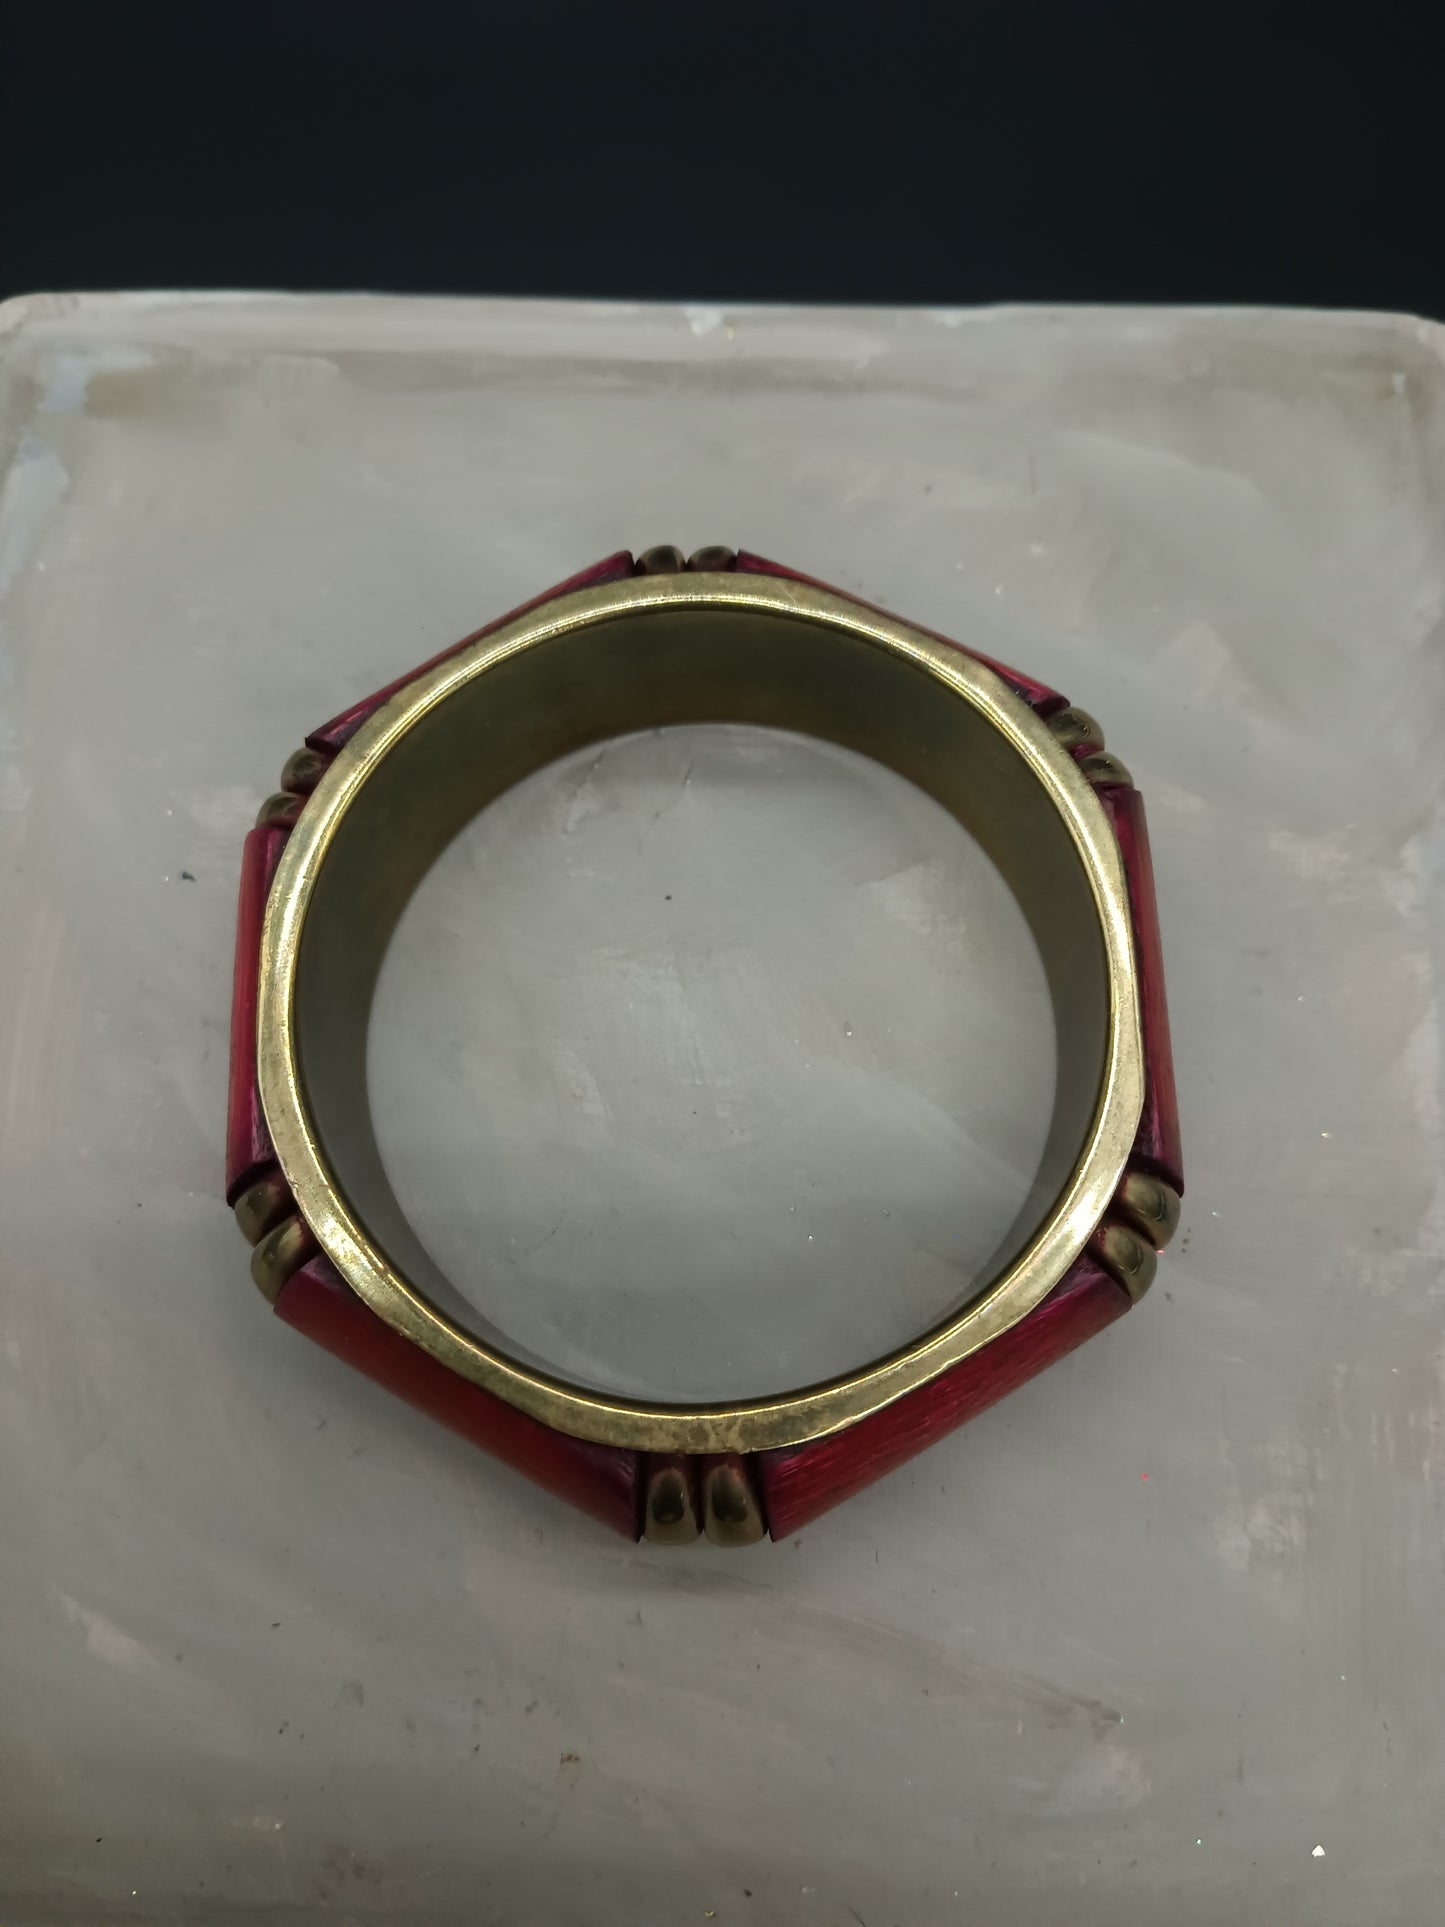 Red Segmented Brass Bracelet